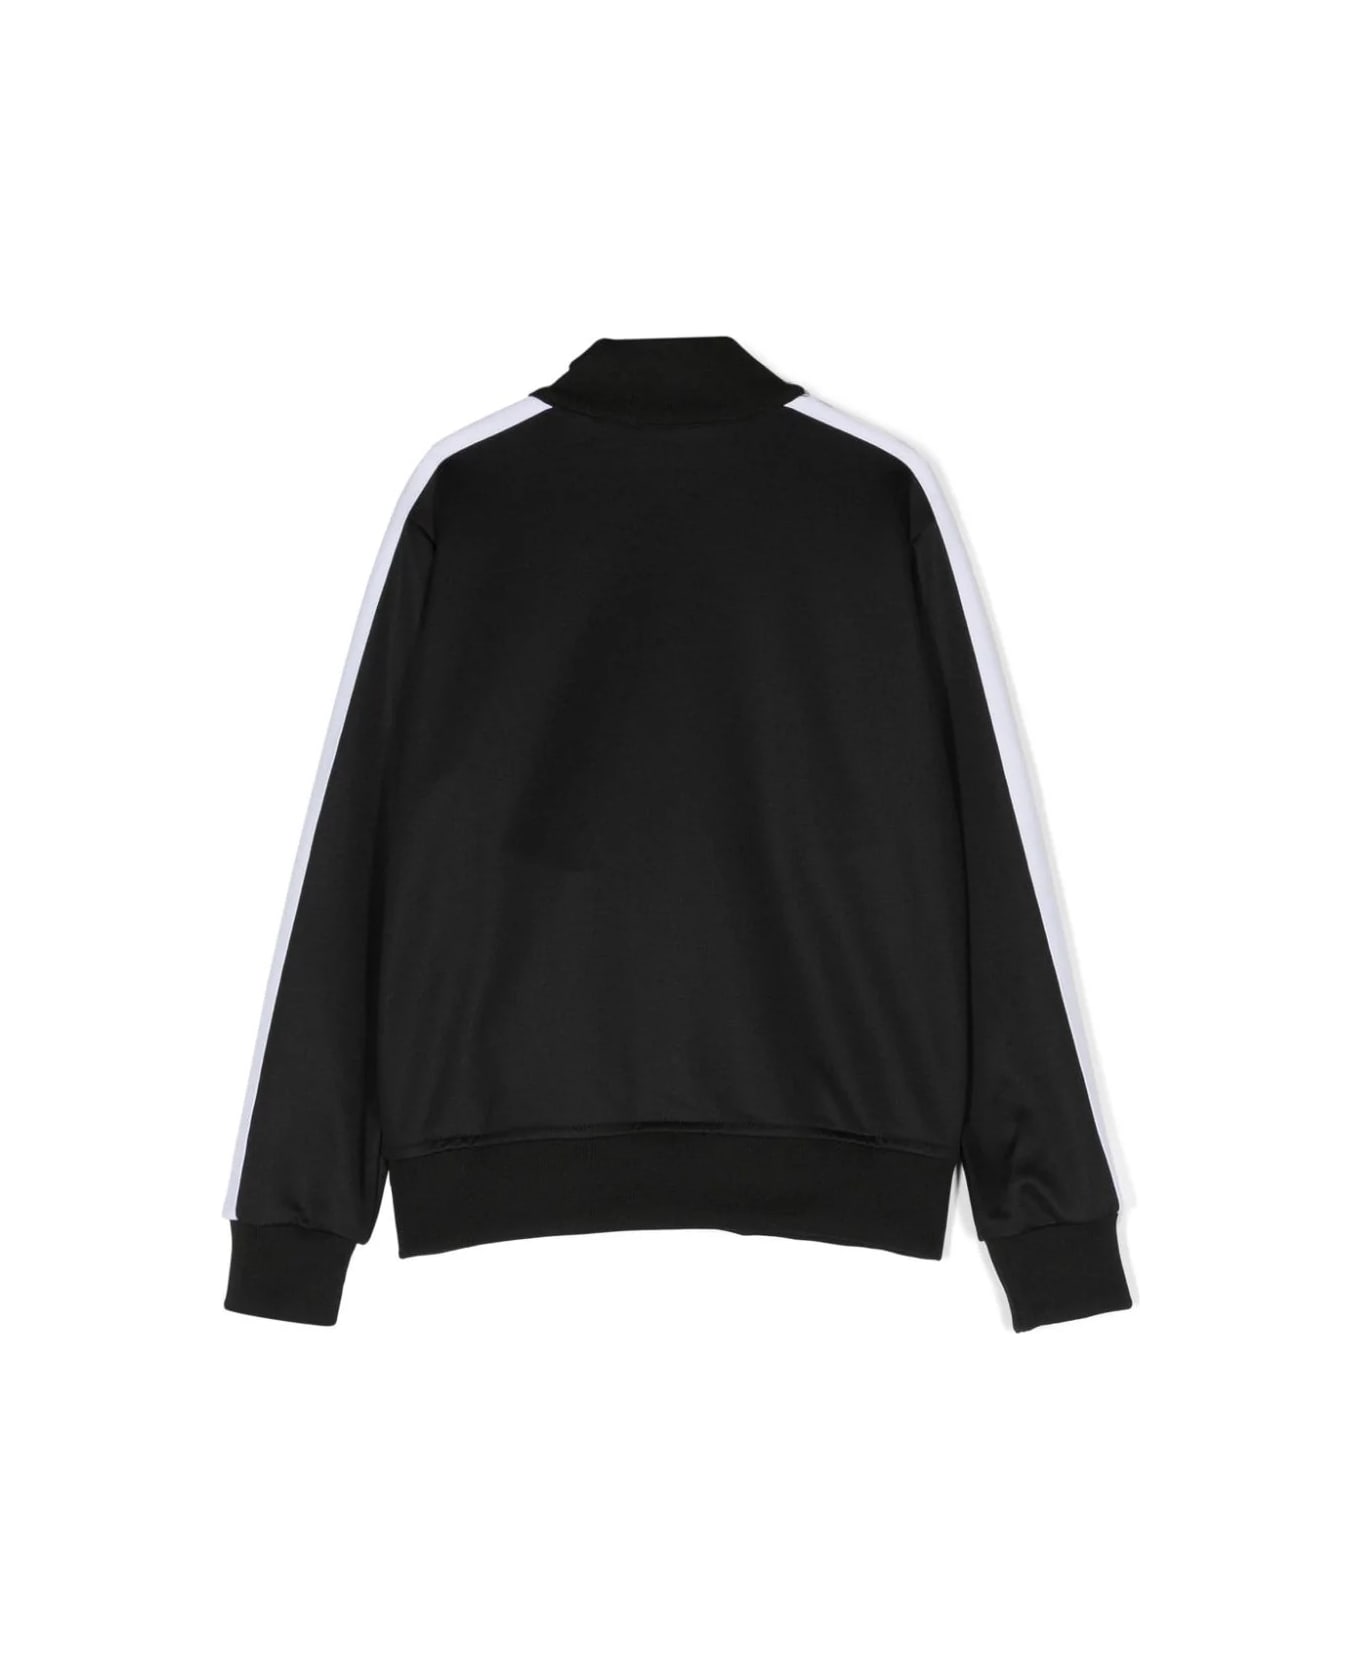 Palm Angels Black Track Jacket With Zip And Logo - Black ニットウェア＆スウェットシャツ